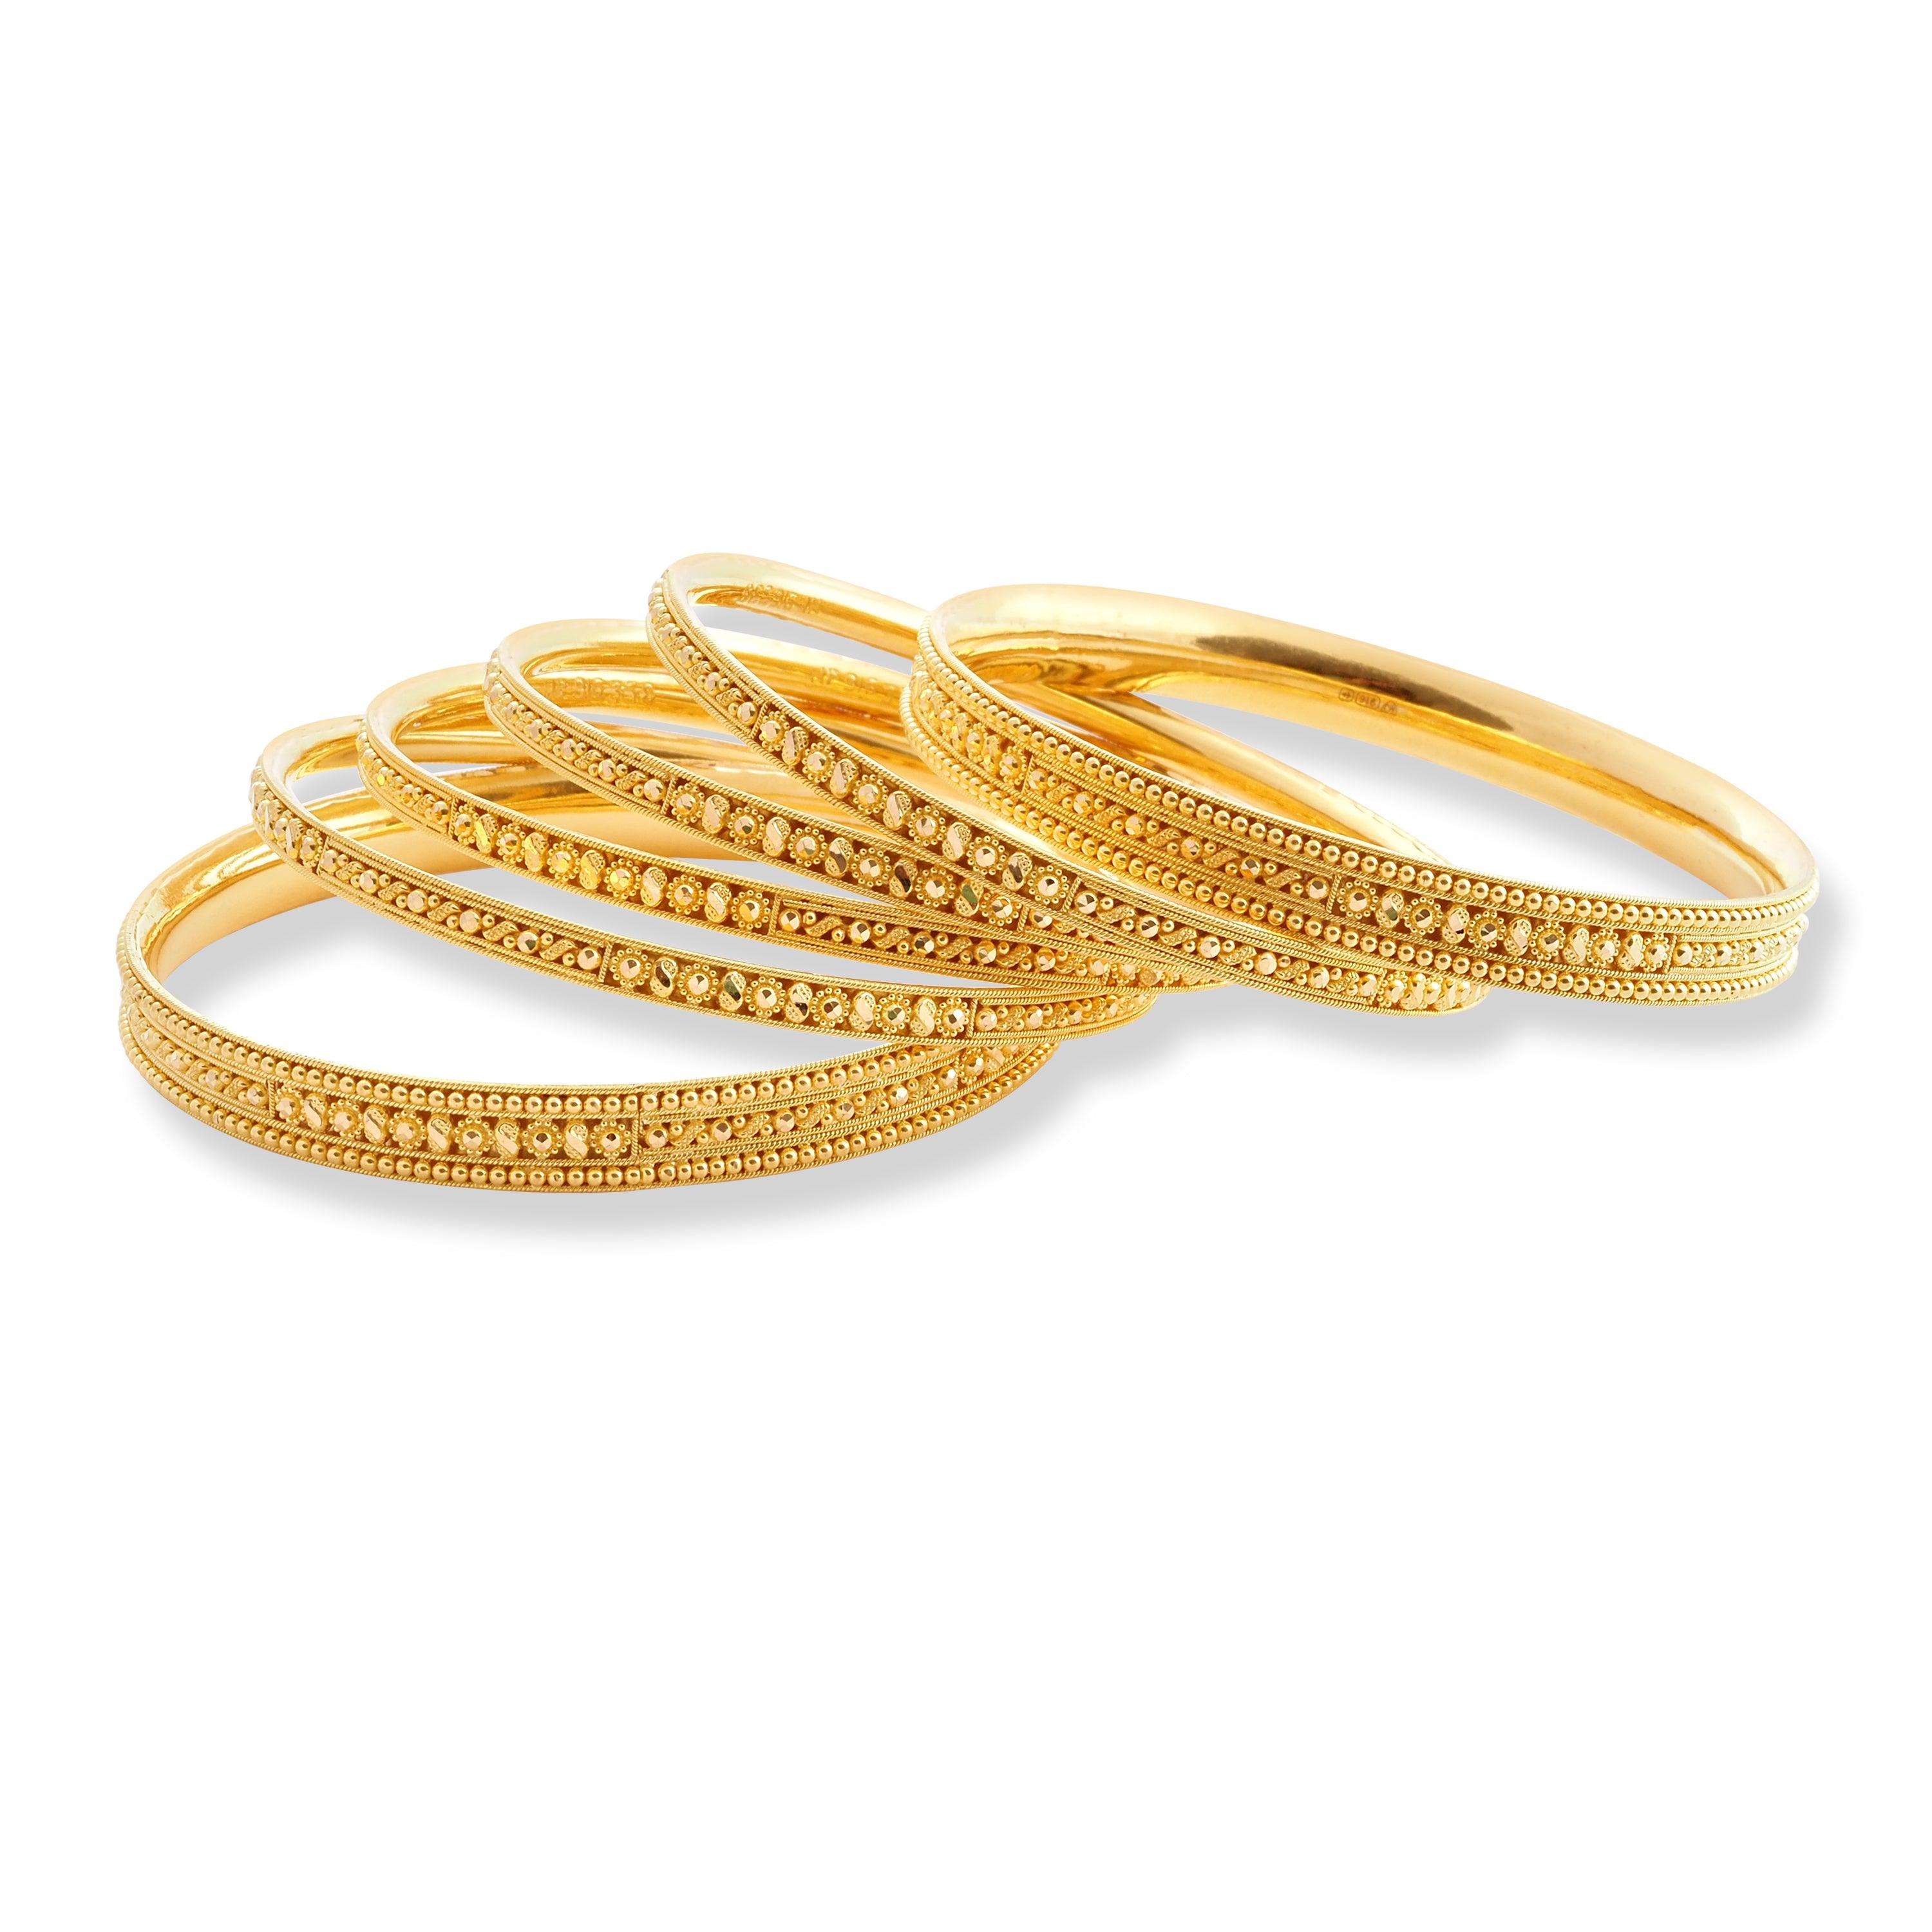 Set of Six 22ct Gold Bangles with Diamond Cut Beads & Flower Design B-8578 - Minar Jewellers